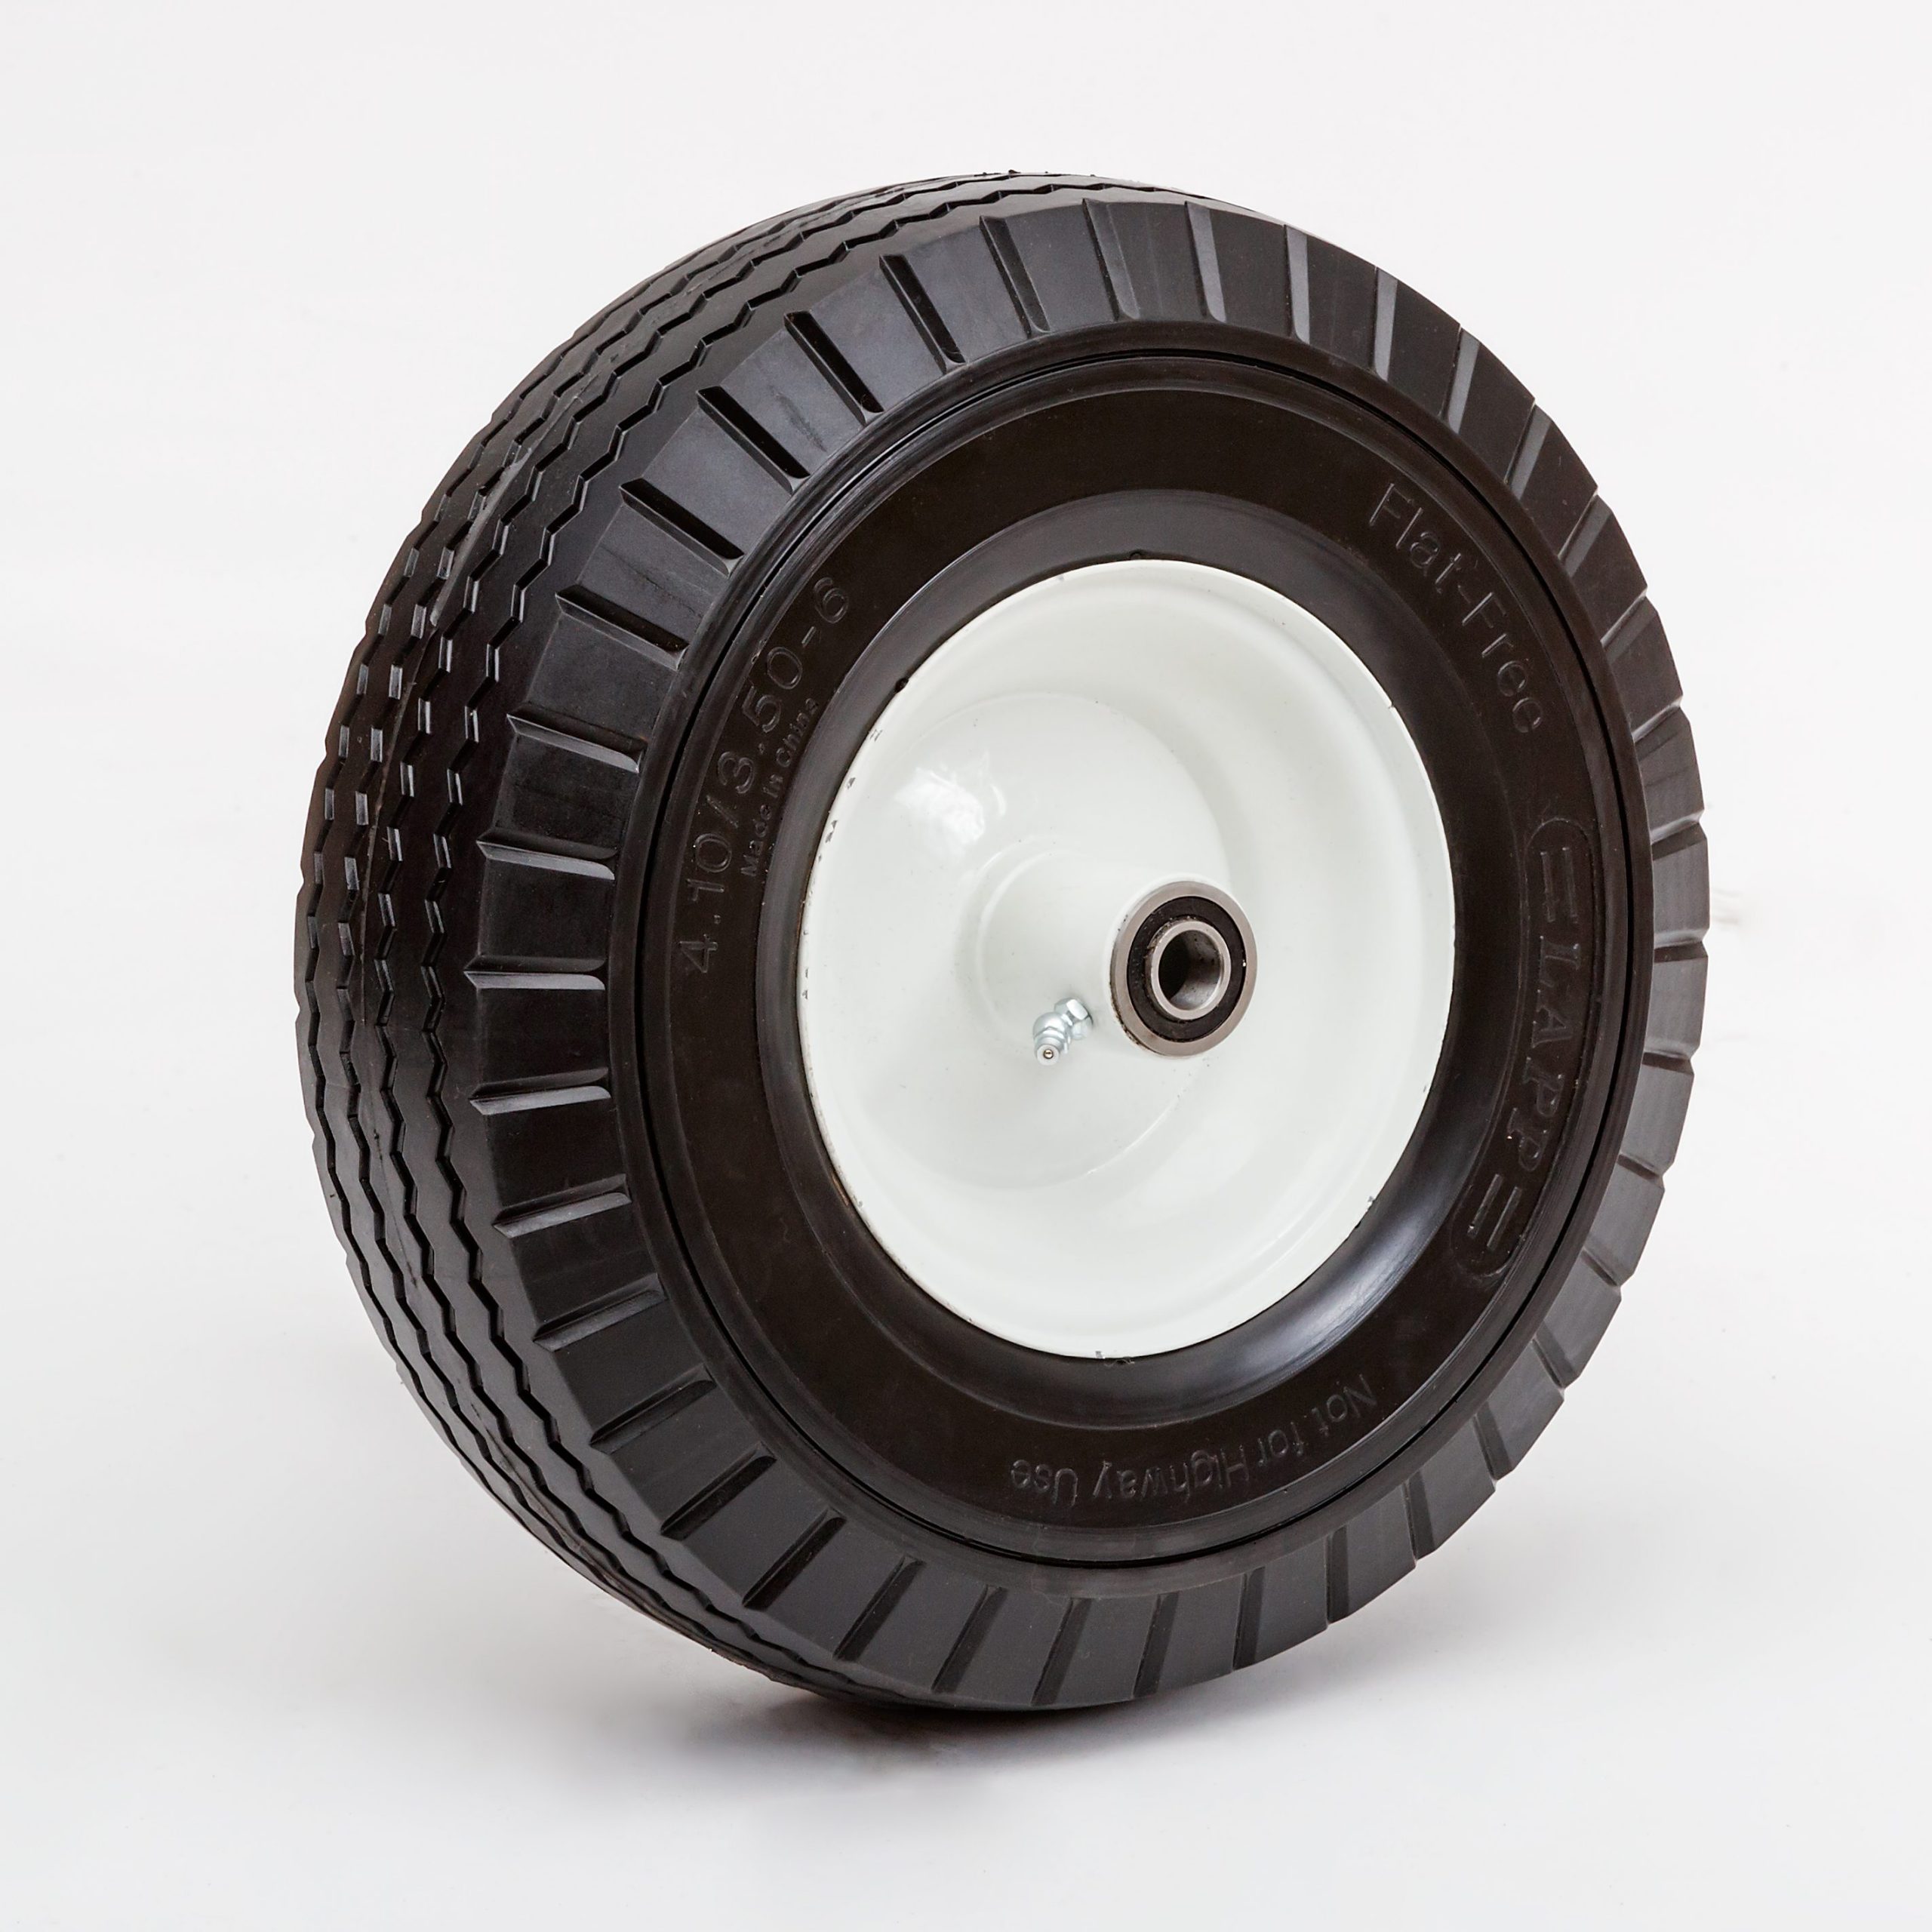 6-1/8 Light-Duty Sawtooth Tread Flat-Free Wheel 100 lb Load Rating pack of 5 